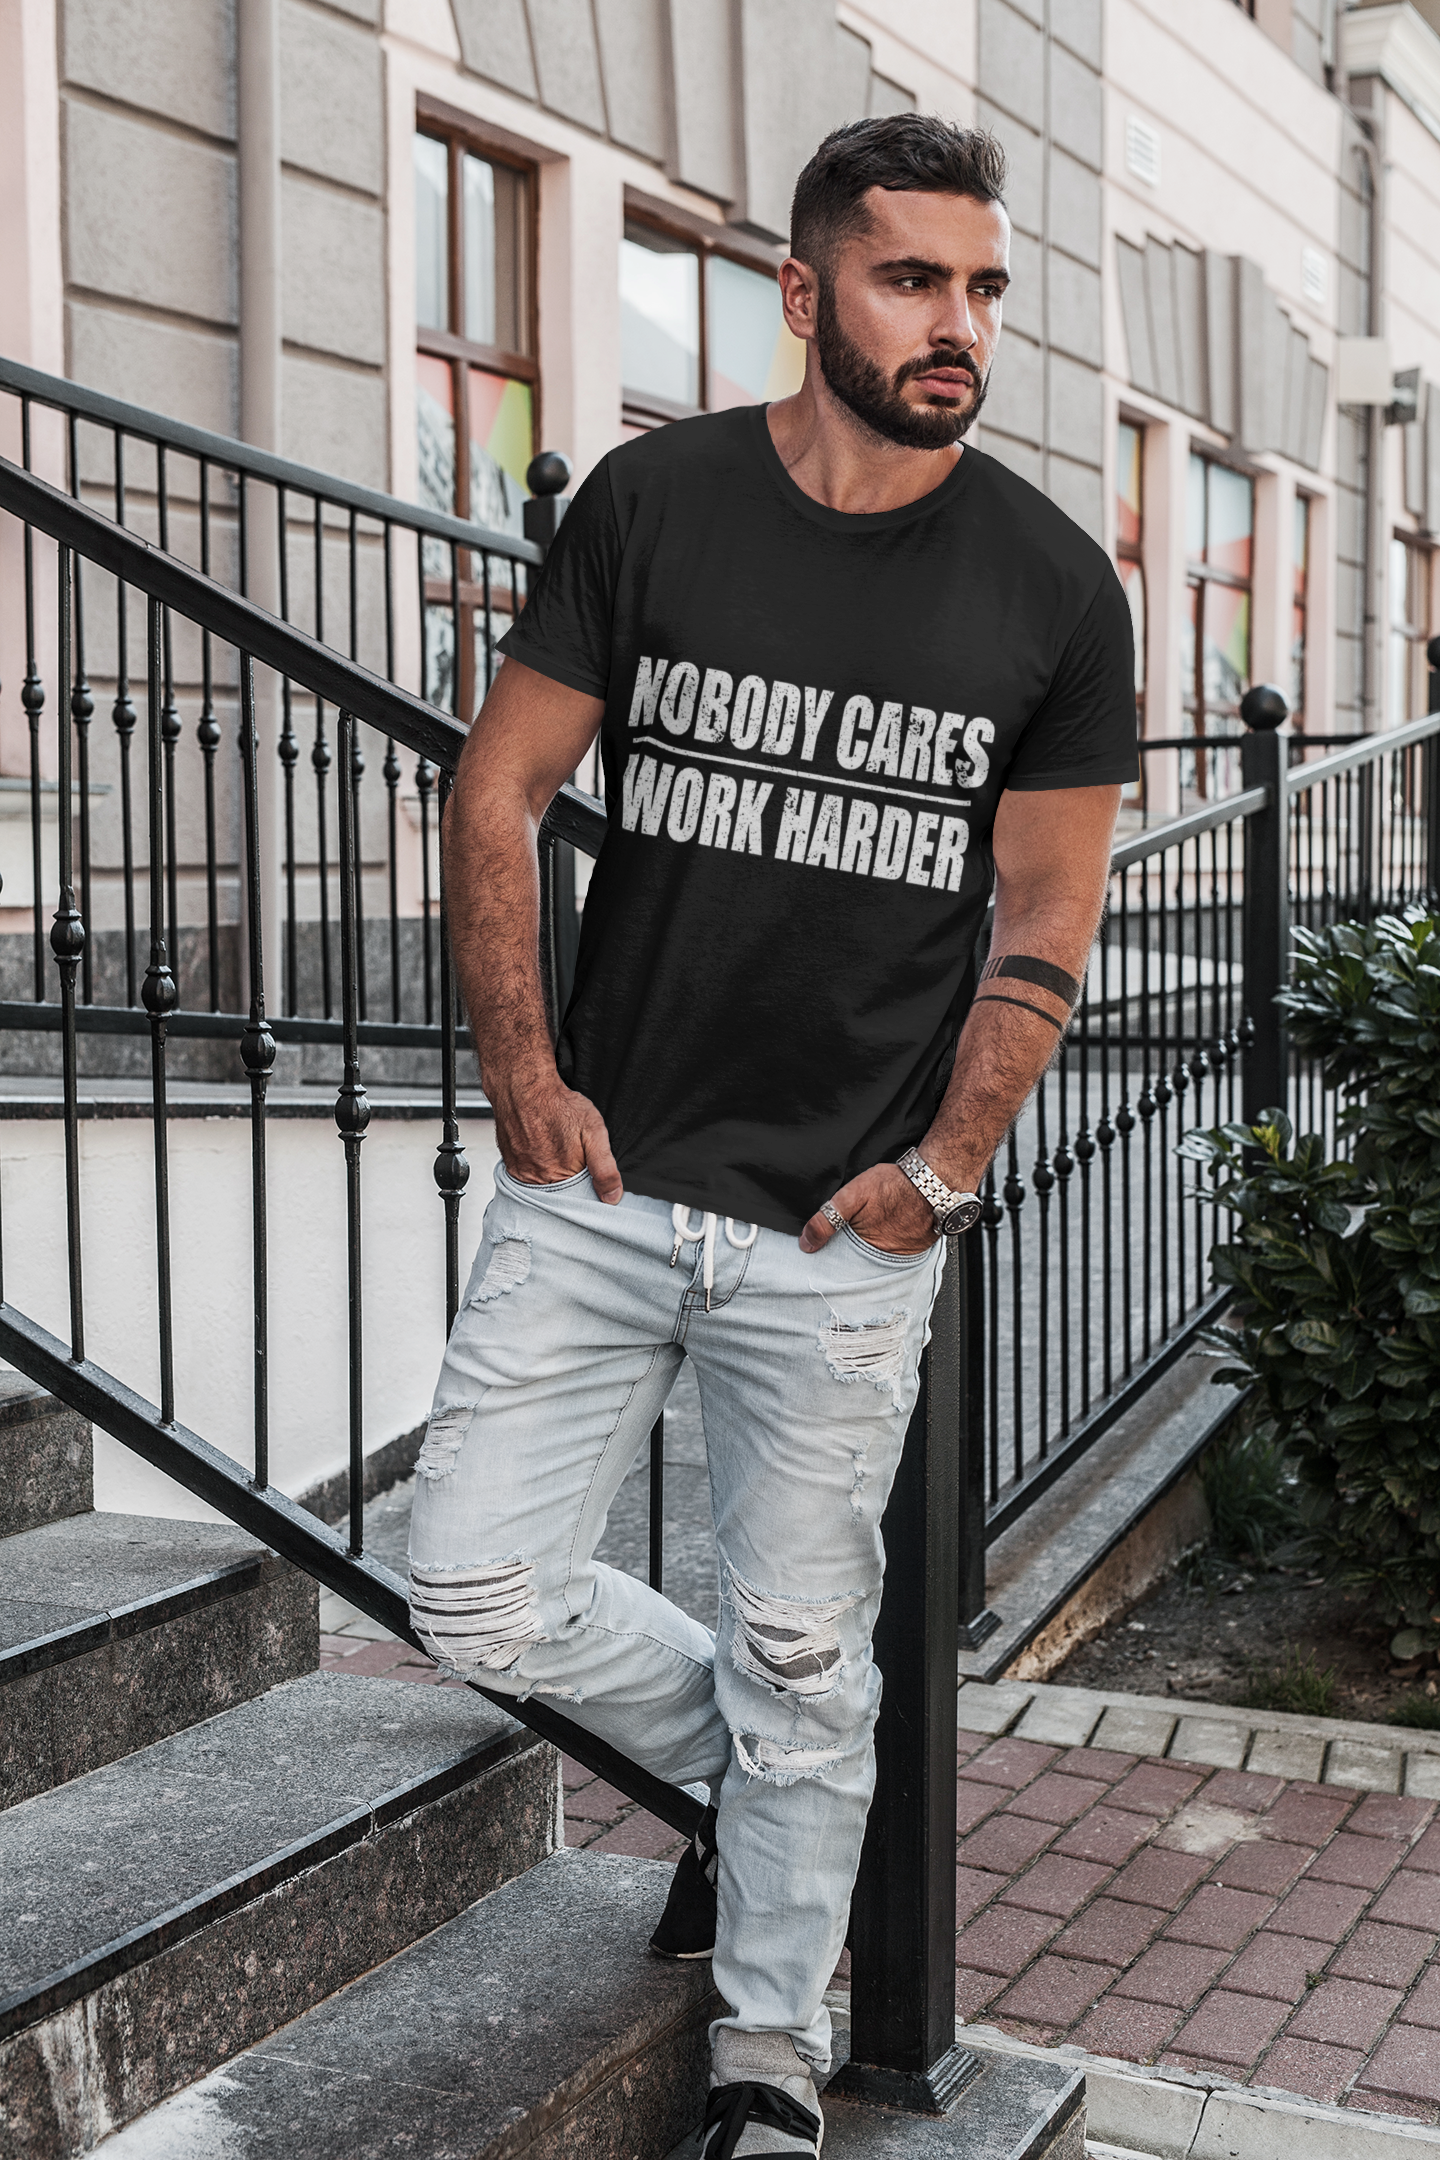 Nobody cares work harder shirt